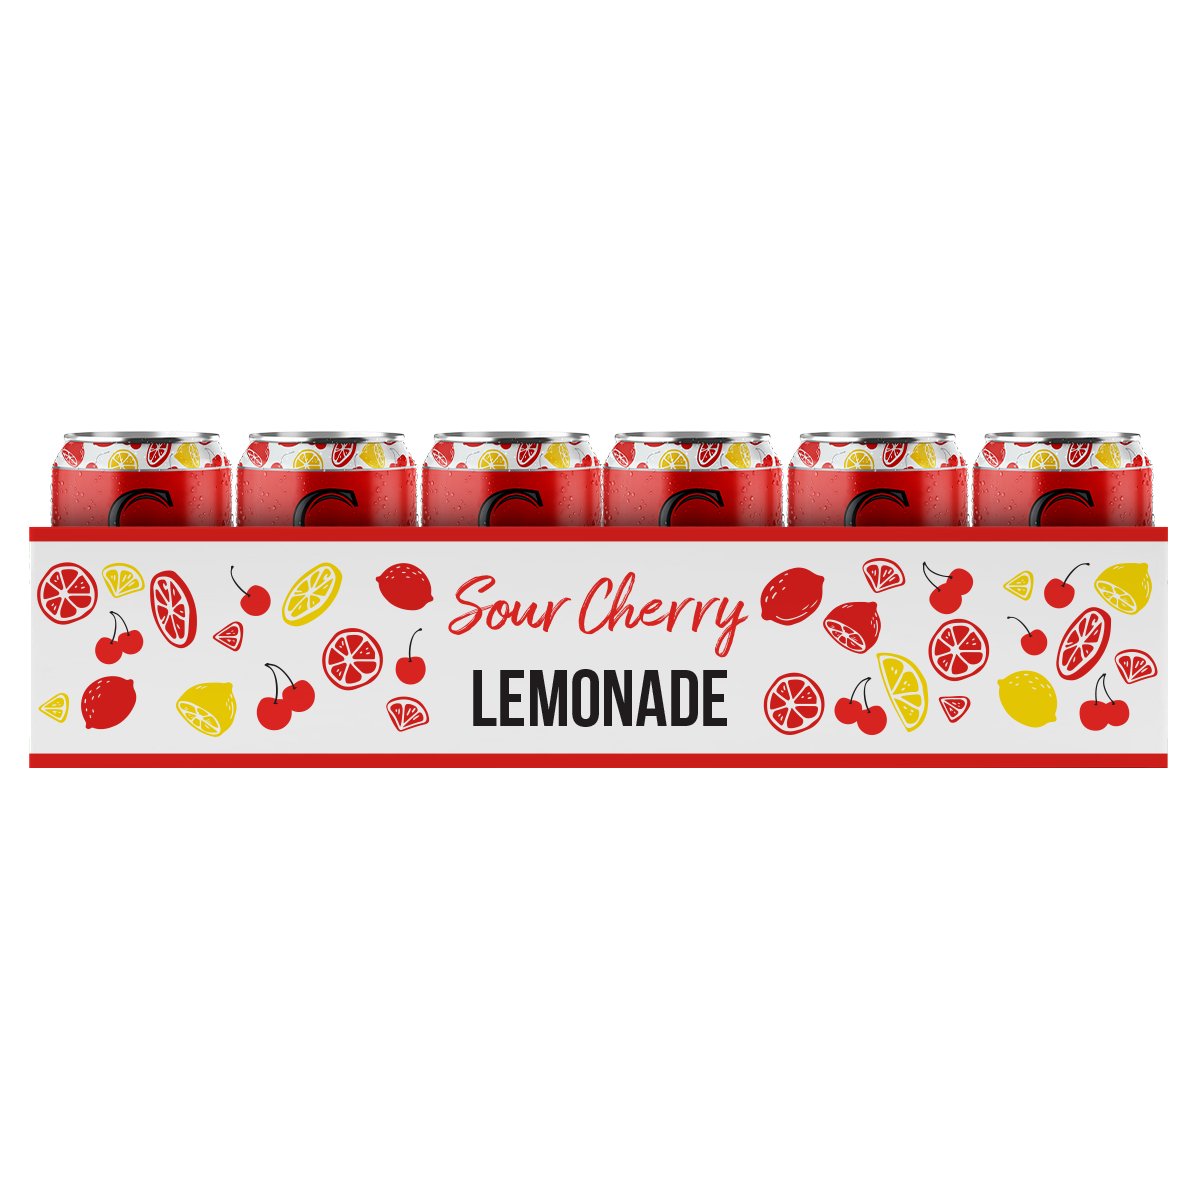 Sour Cherry Lemonade